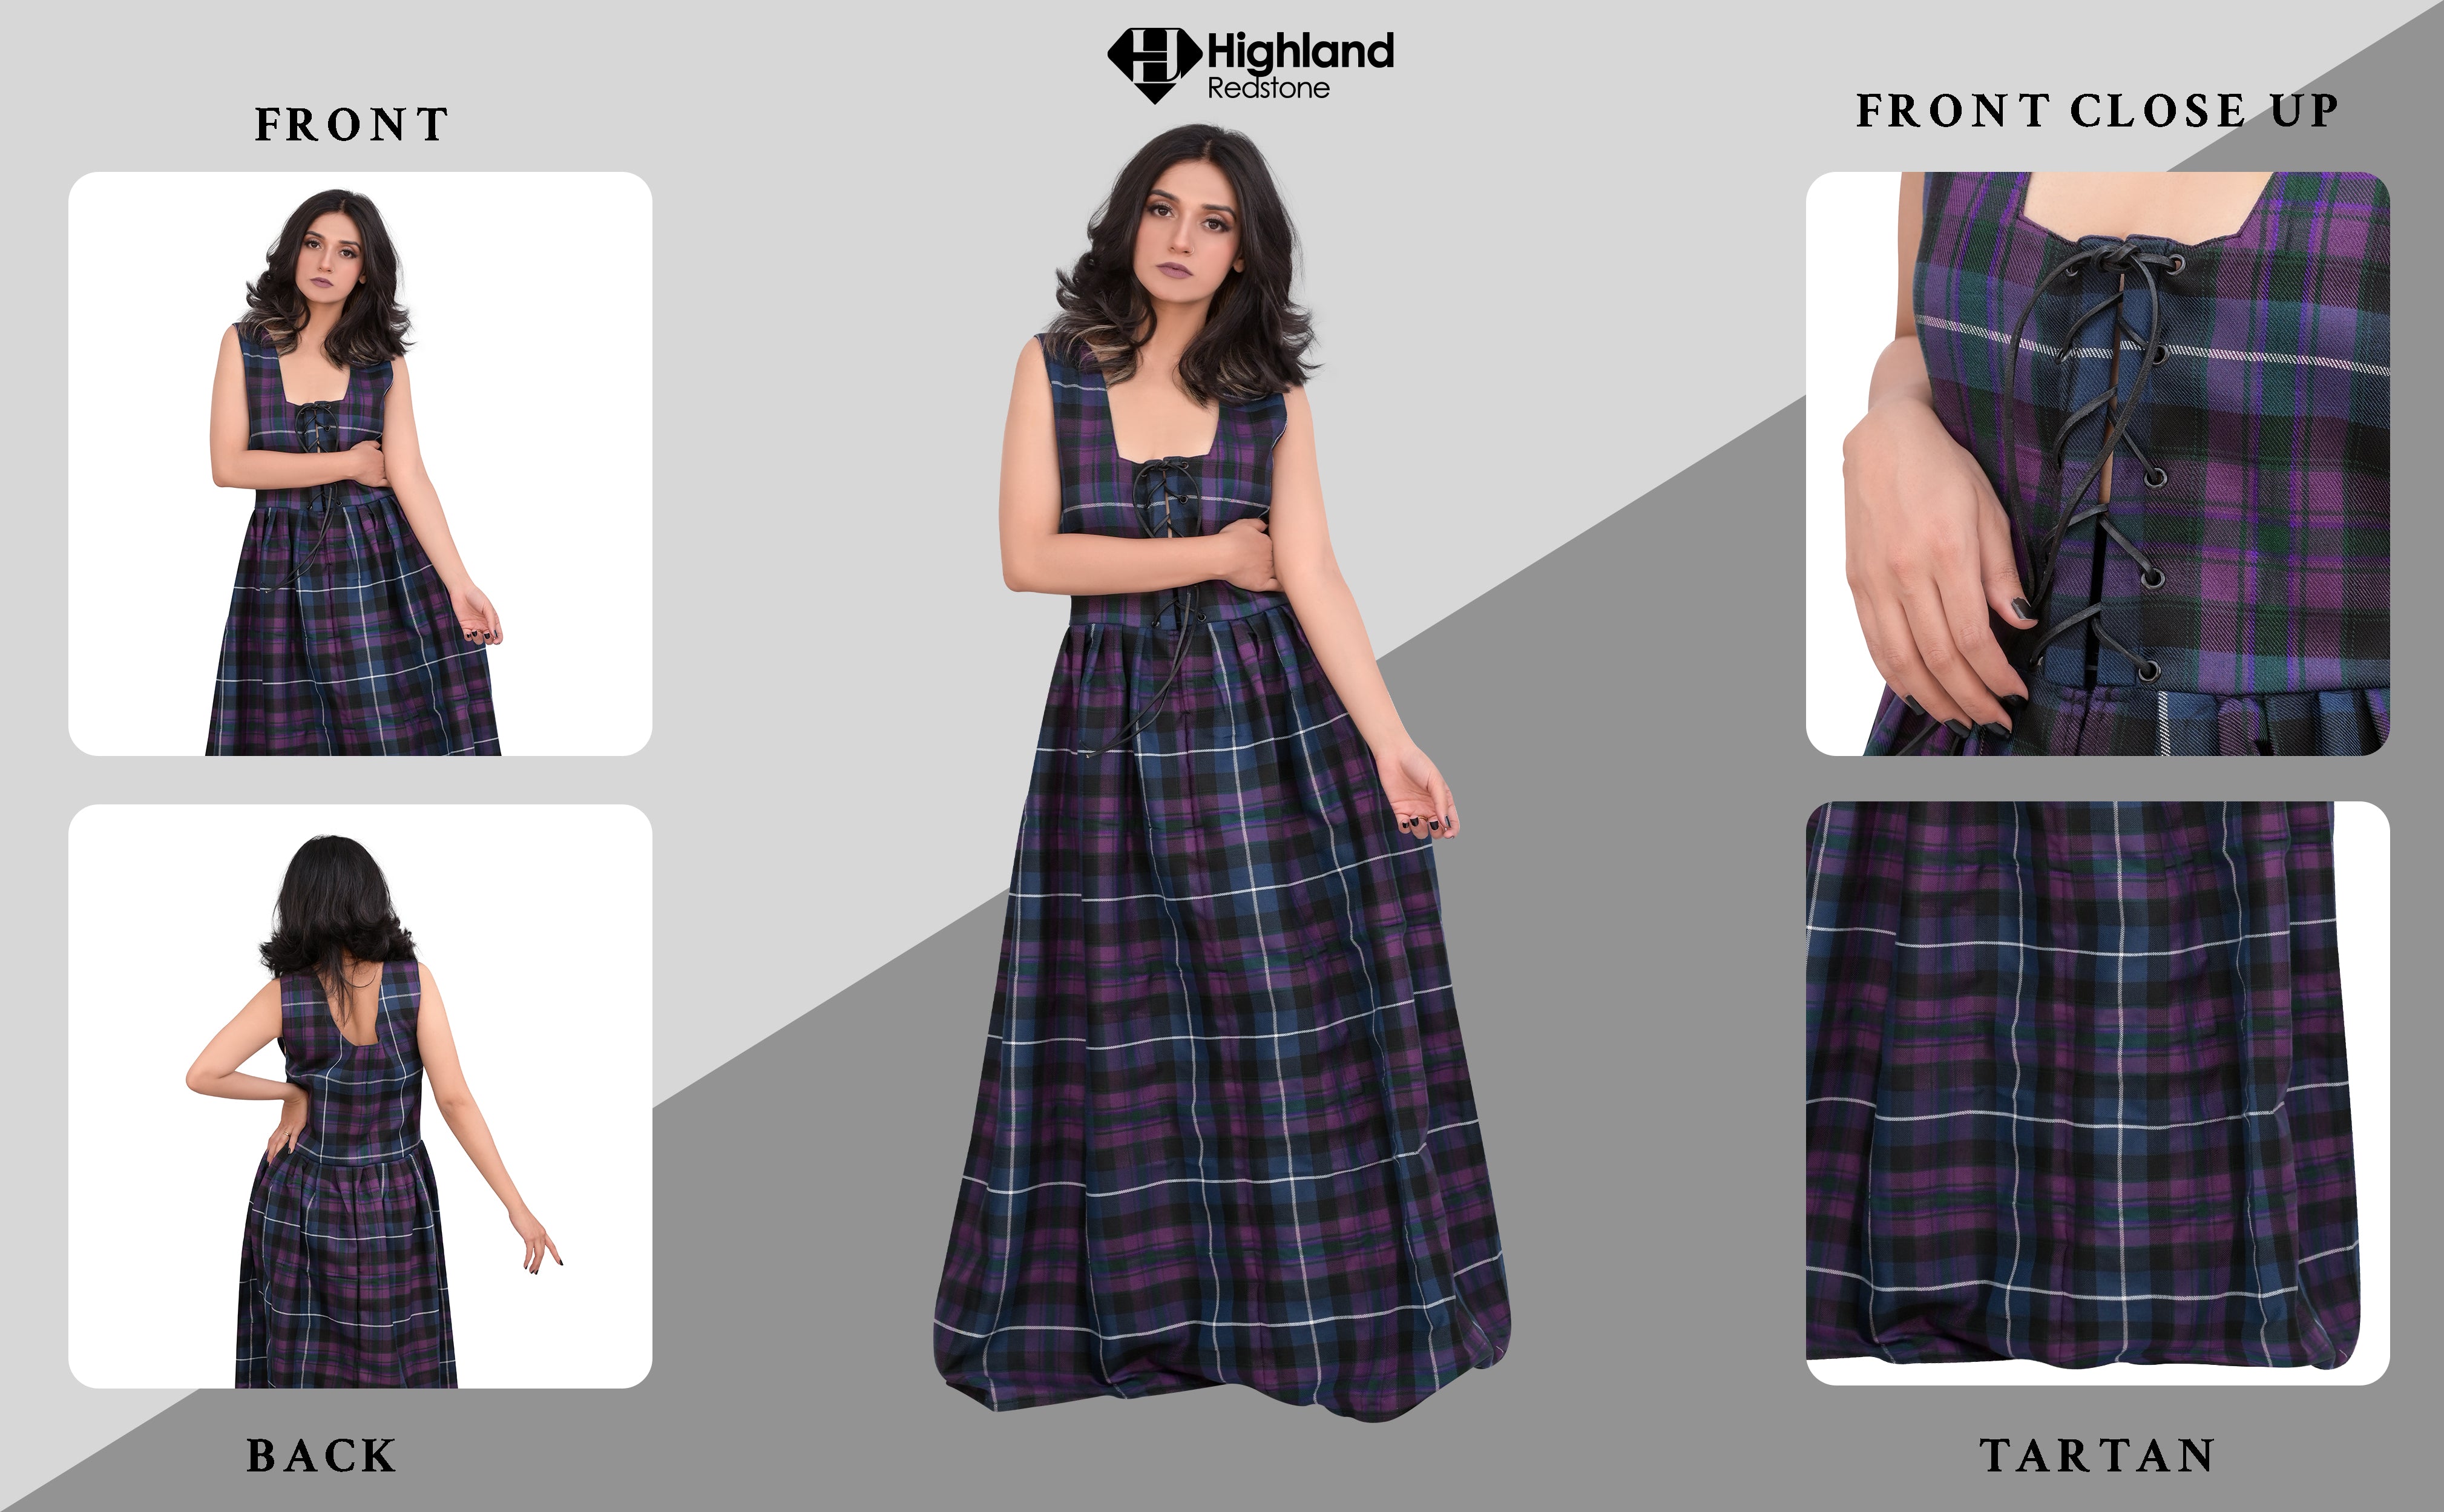 Scottish Dress (Pride Of Scotland)